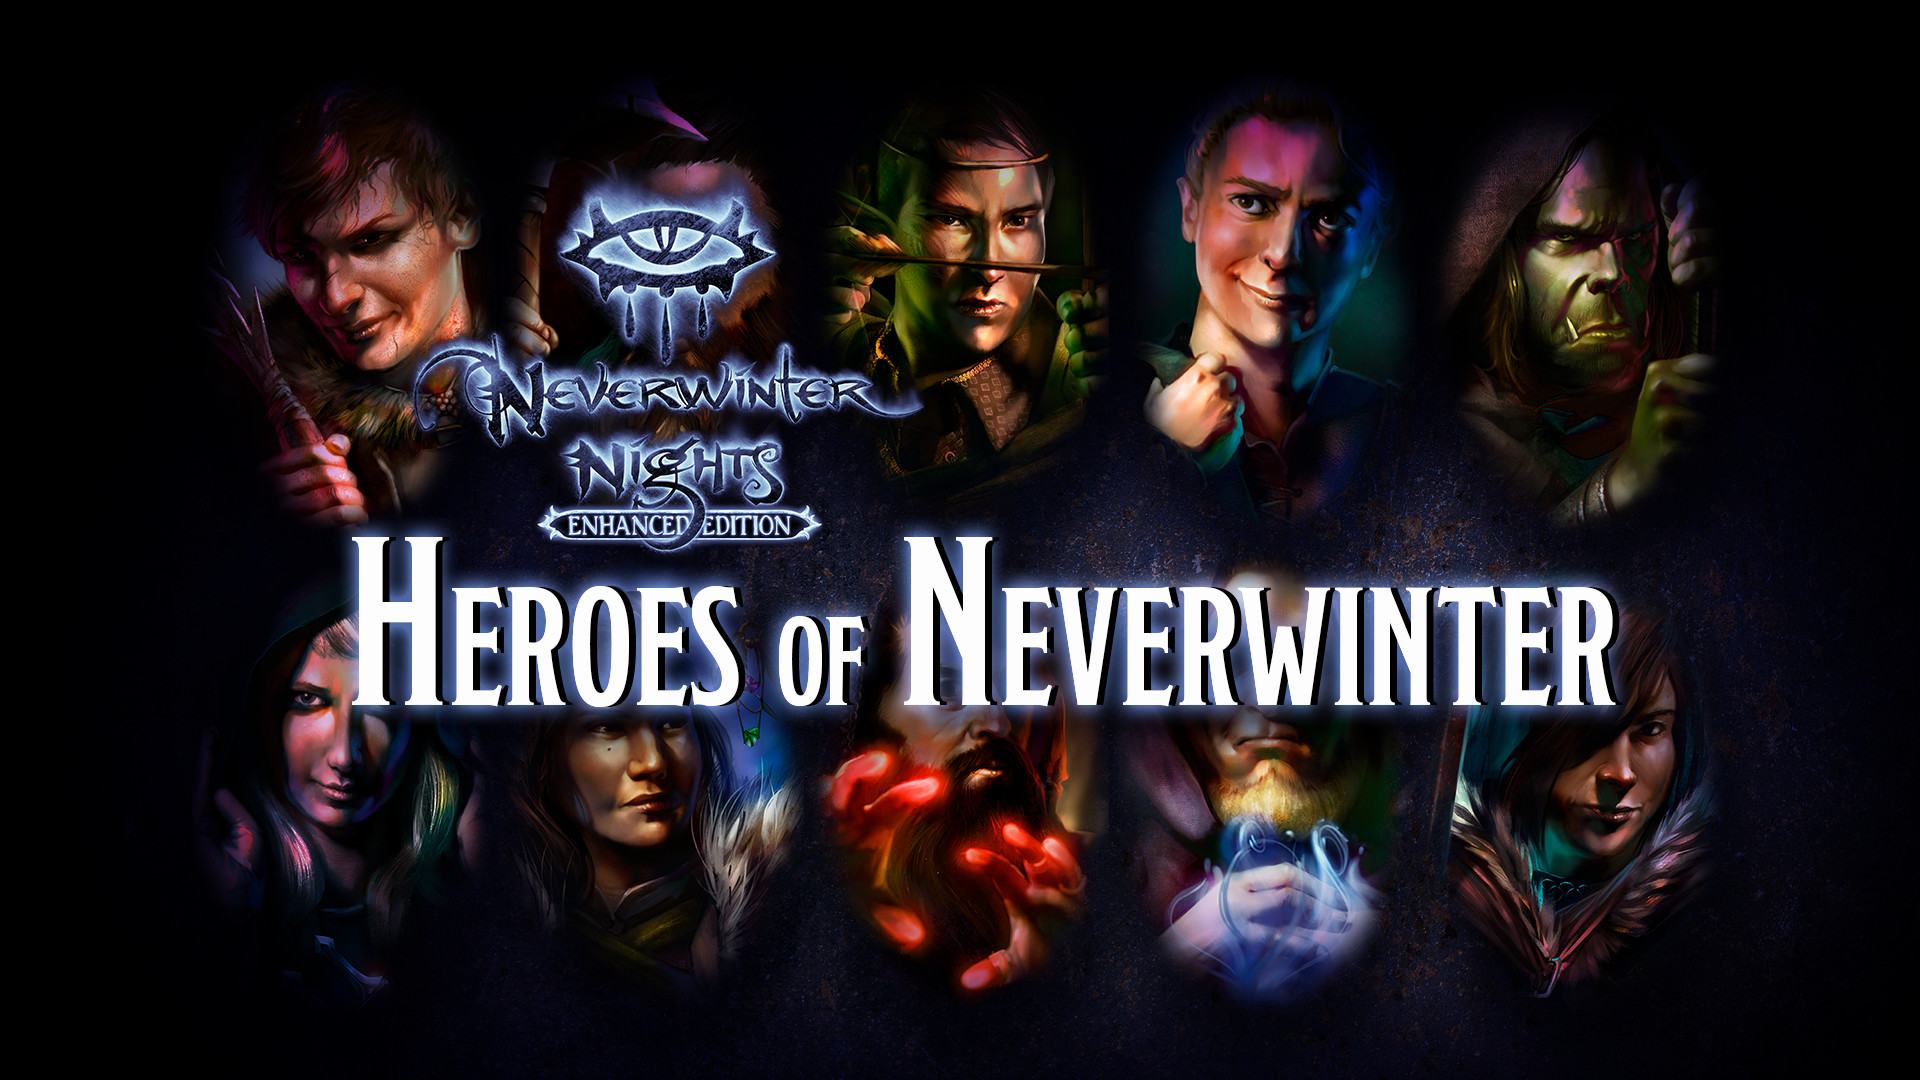 (5.64$) Neverwinter Nights: Enhanced Edition - Heroes of Neverwinter DLC Steam CD Key